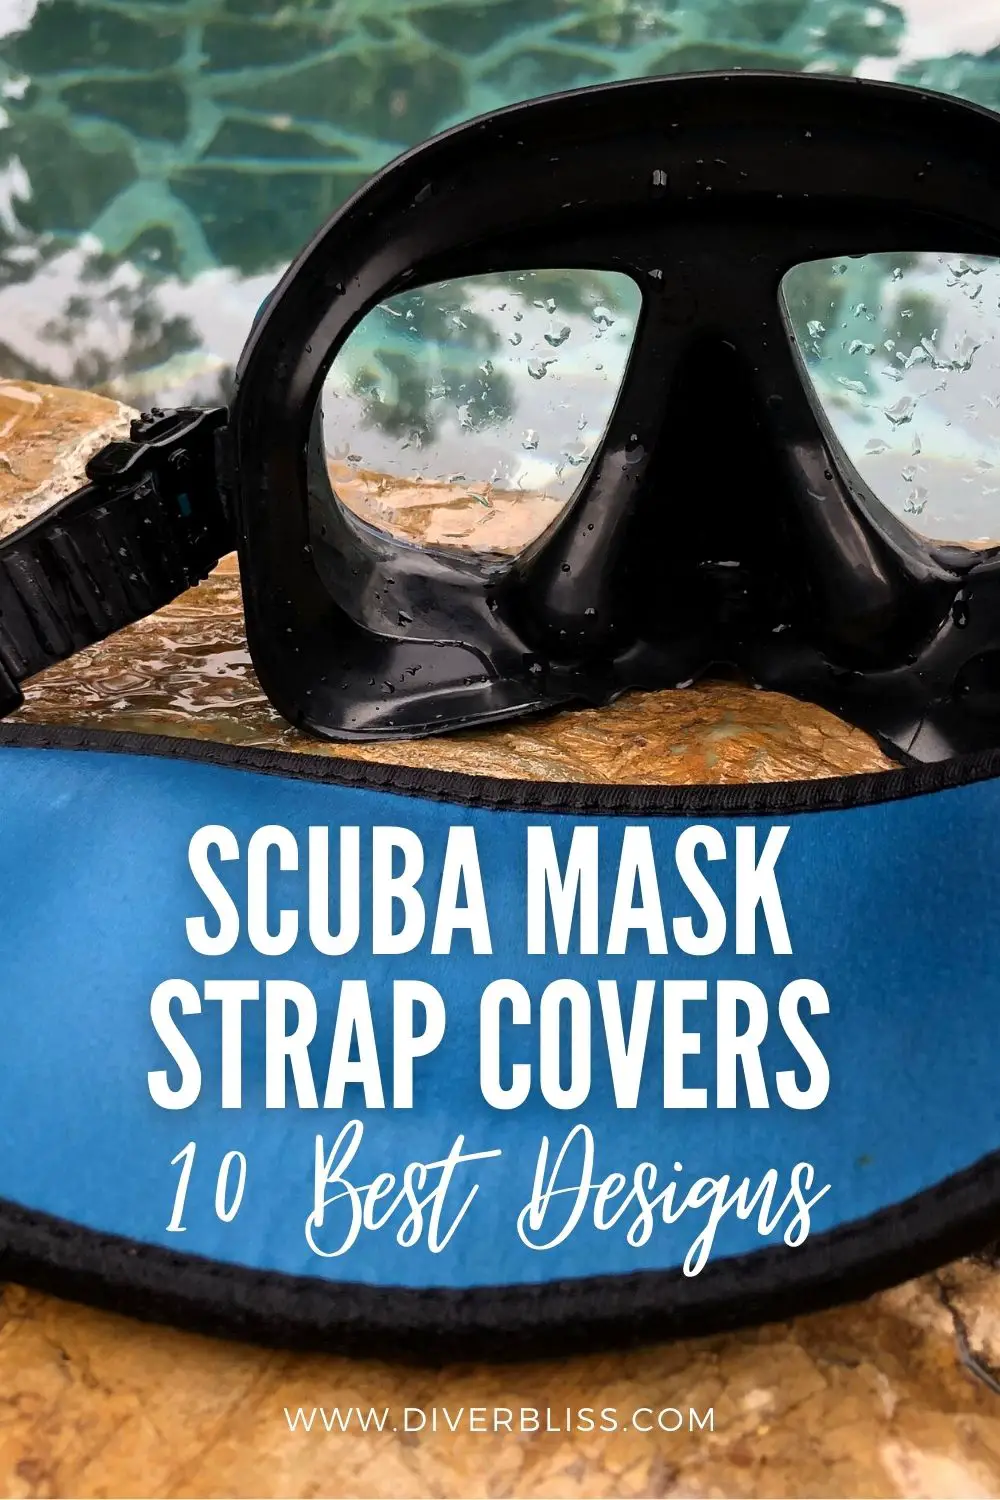 scuba mask strap covers: 10 best designs